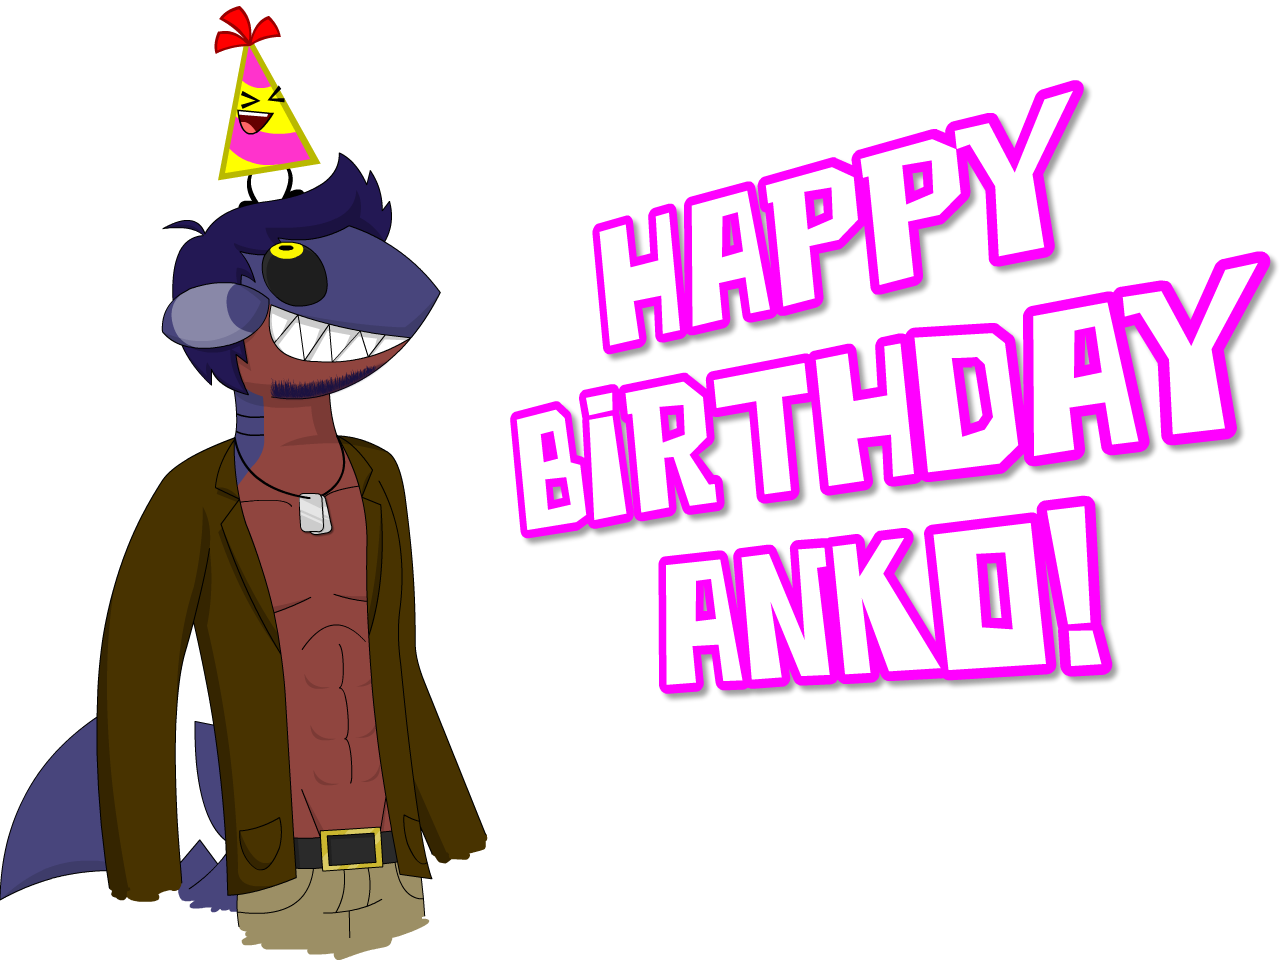 Happy Birthday Anko!